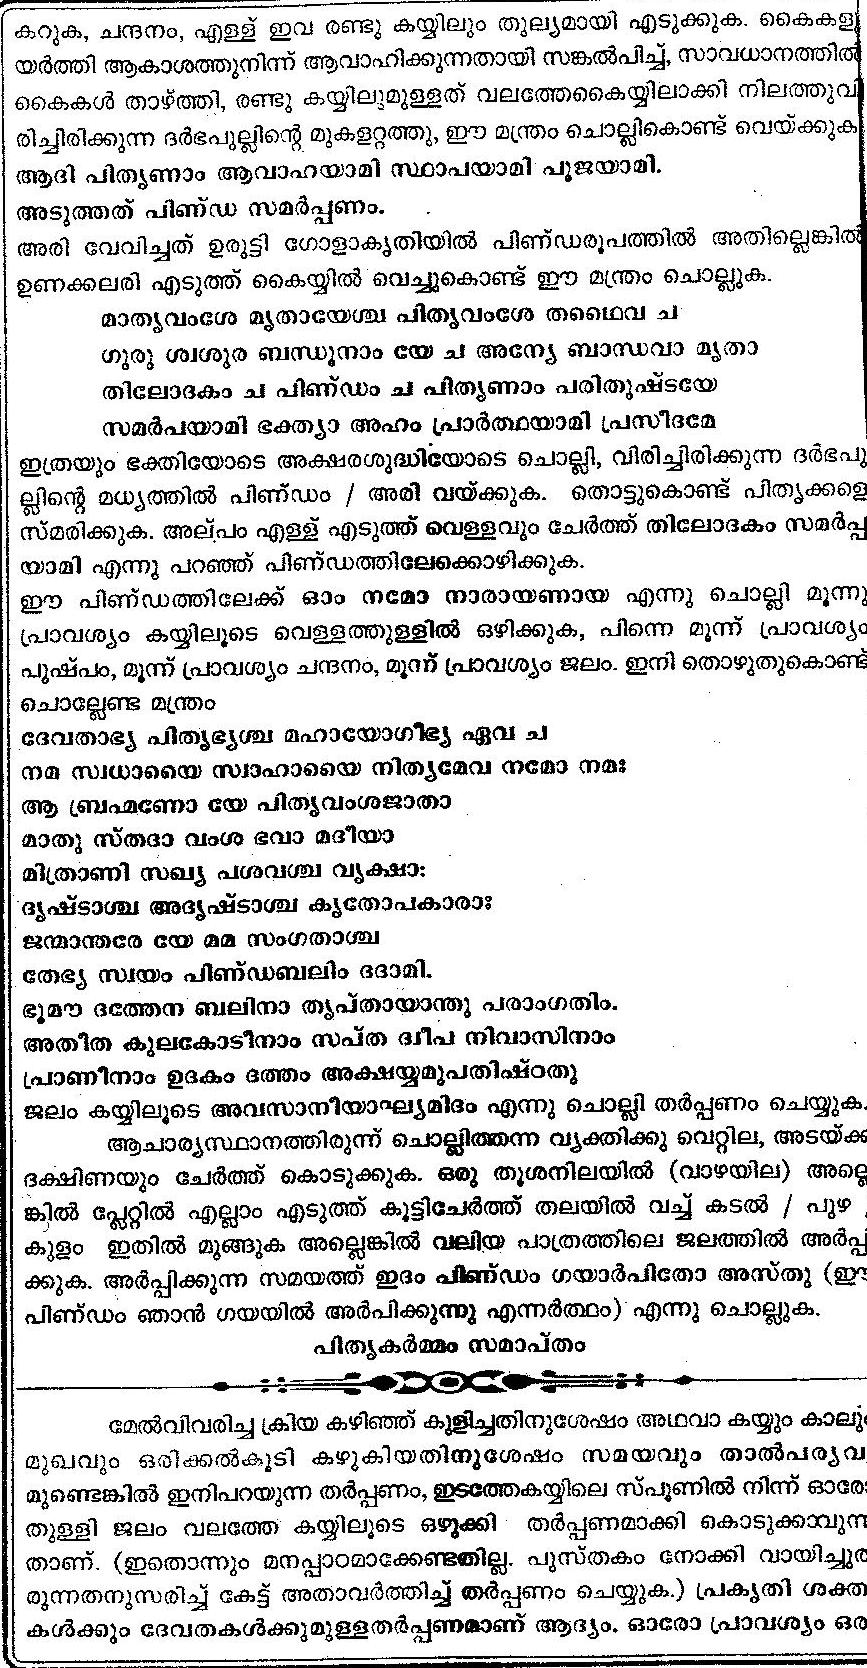 shani mantra in malayalam pdf 33